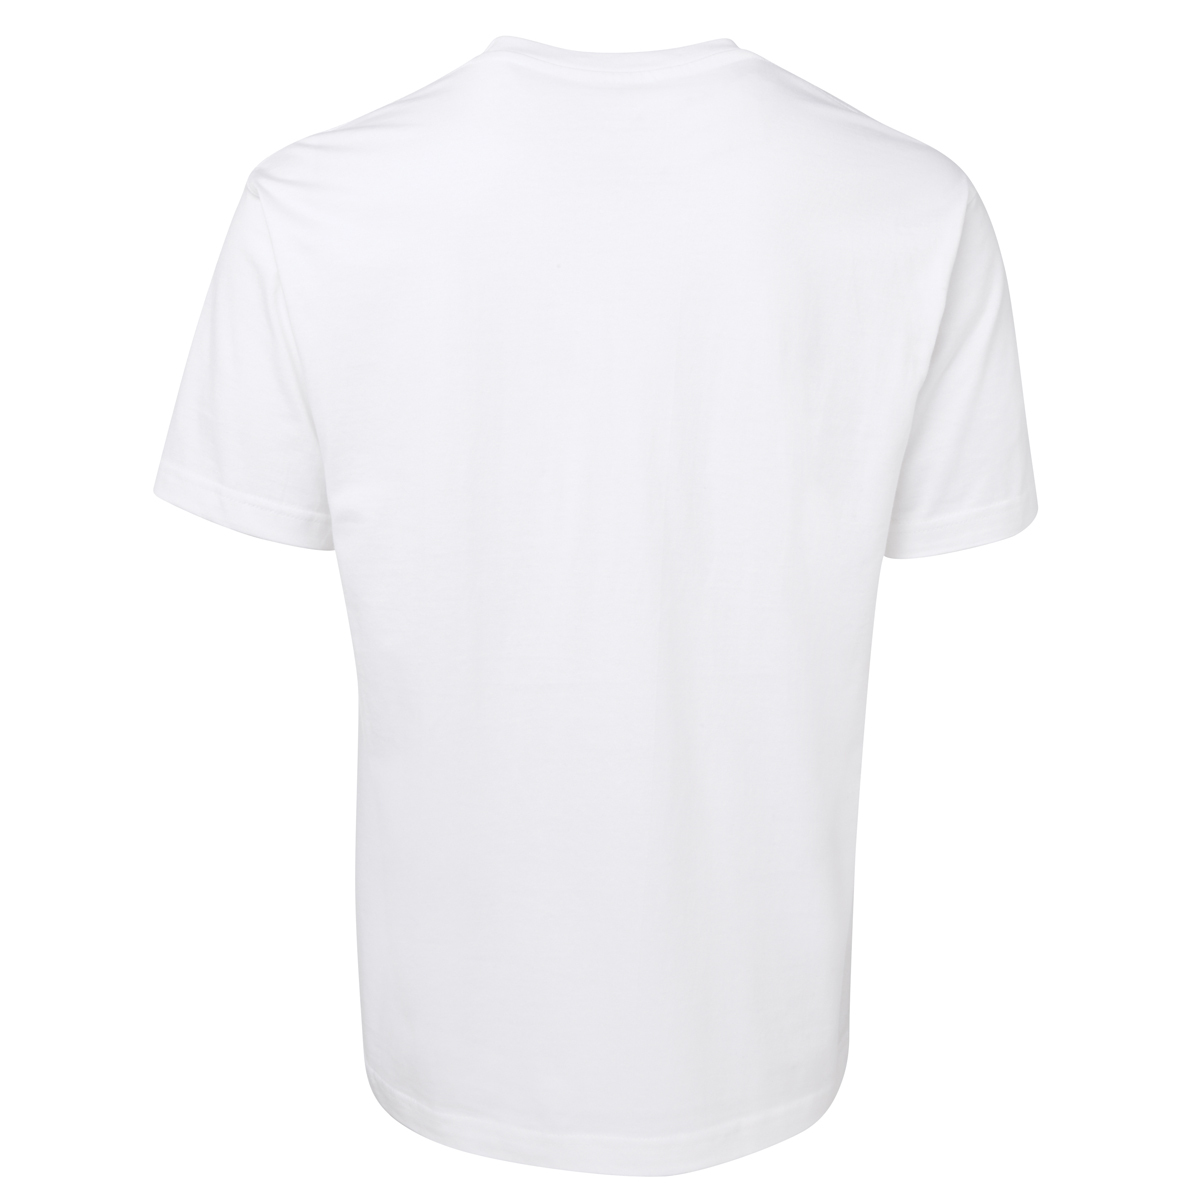 Cotton T-Shirt - White